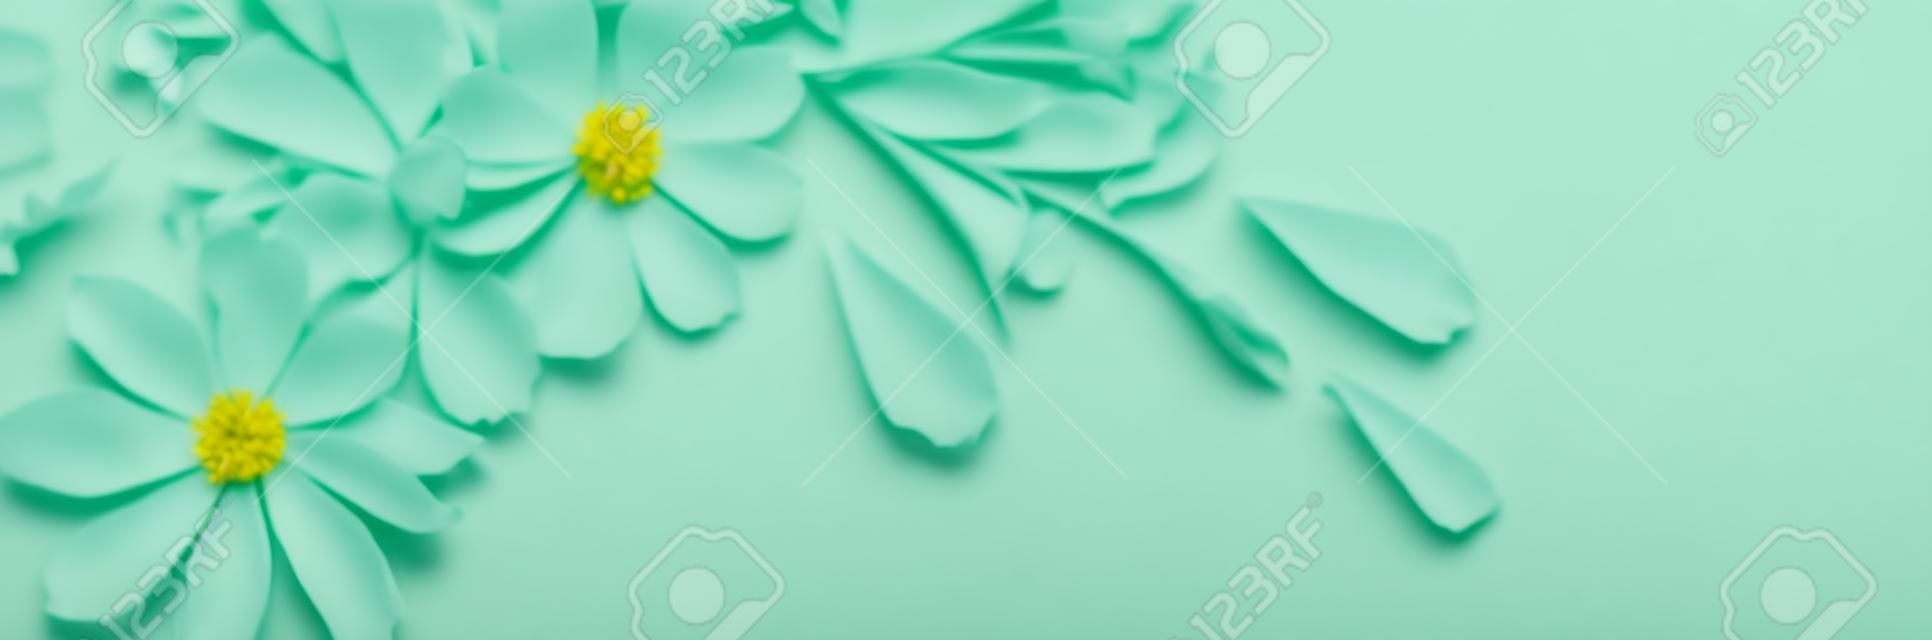 fiori bianchi su sfondo di carta verde